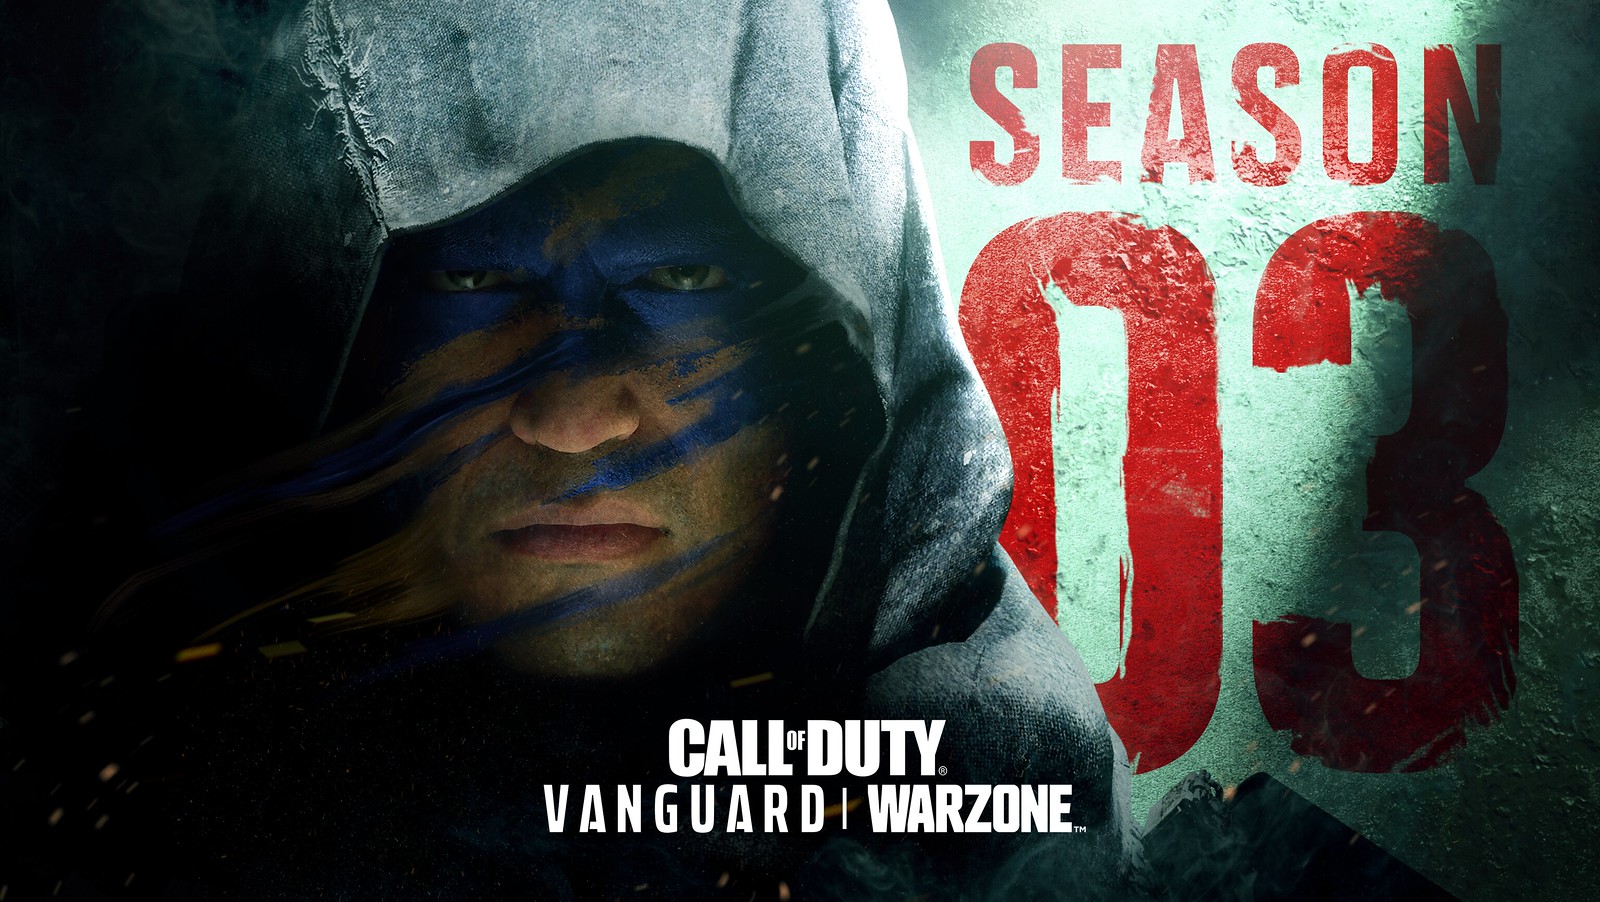 52016624669 b970e7fd1e h - Call of Duty: Vanguard und Warzone: Saison 3 kommt am 27. April